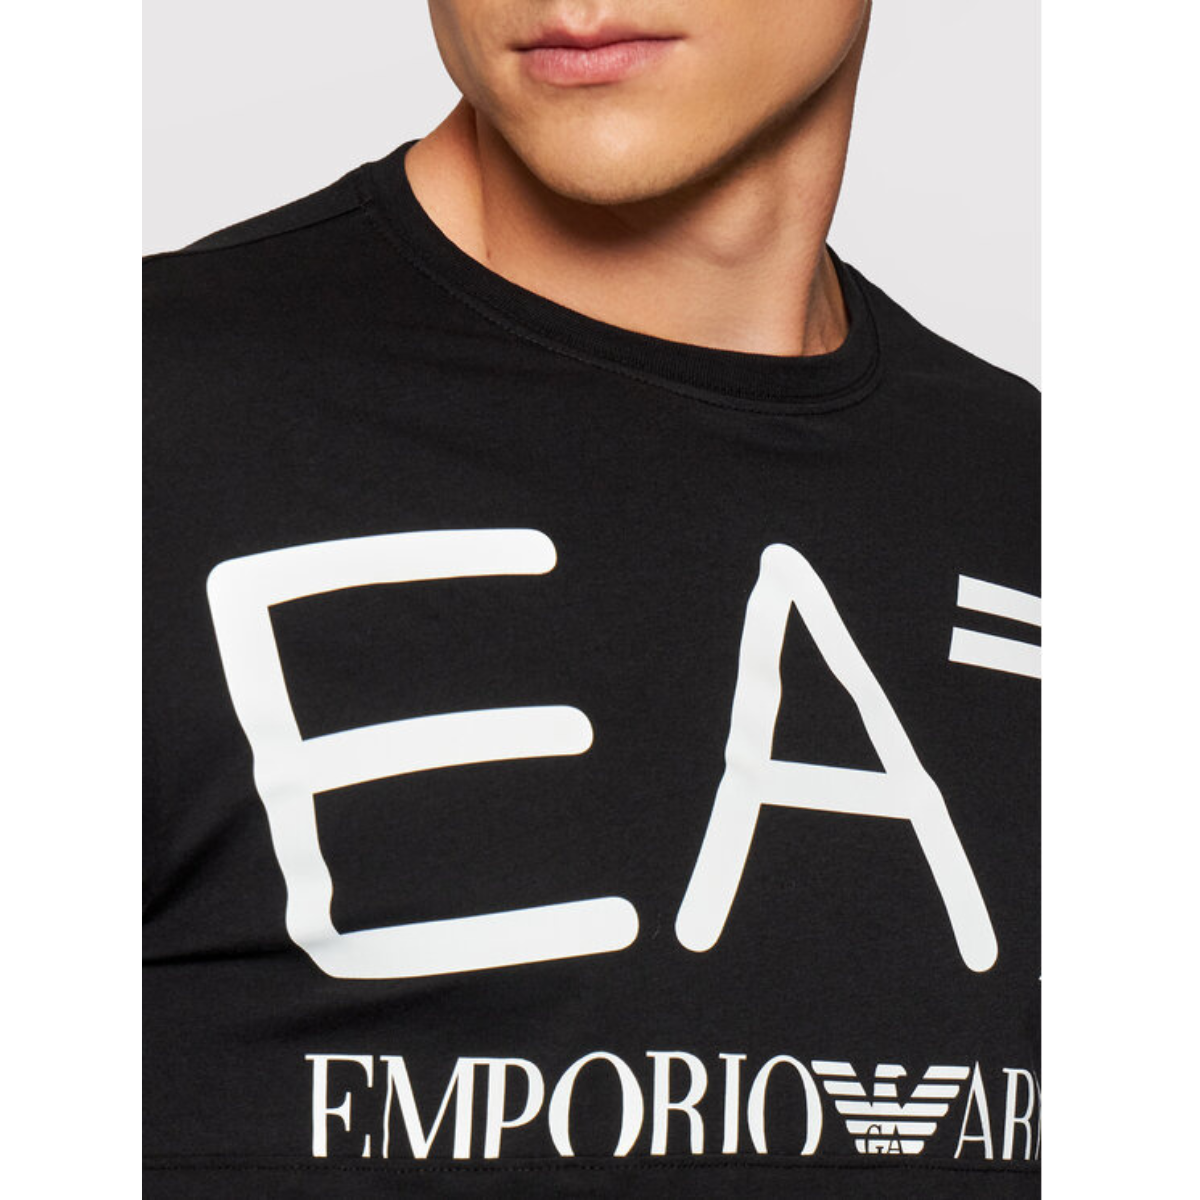 EA7 Emporio Armani - T-Shirt - Black